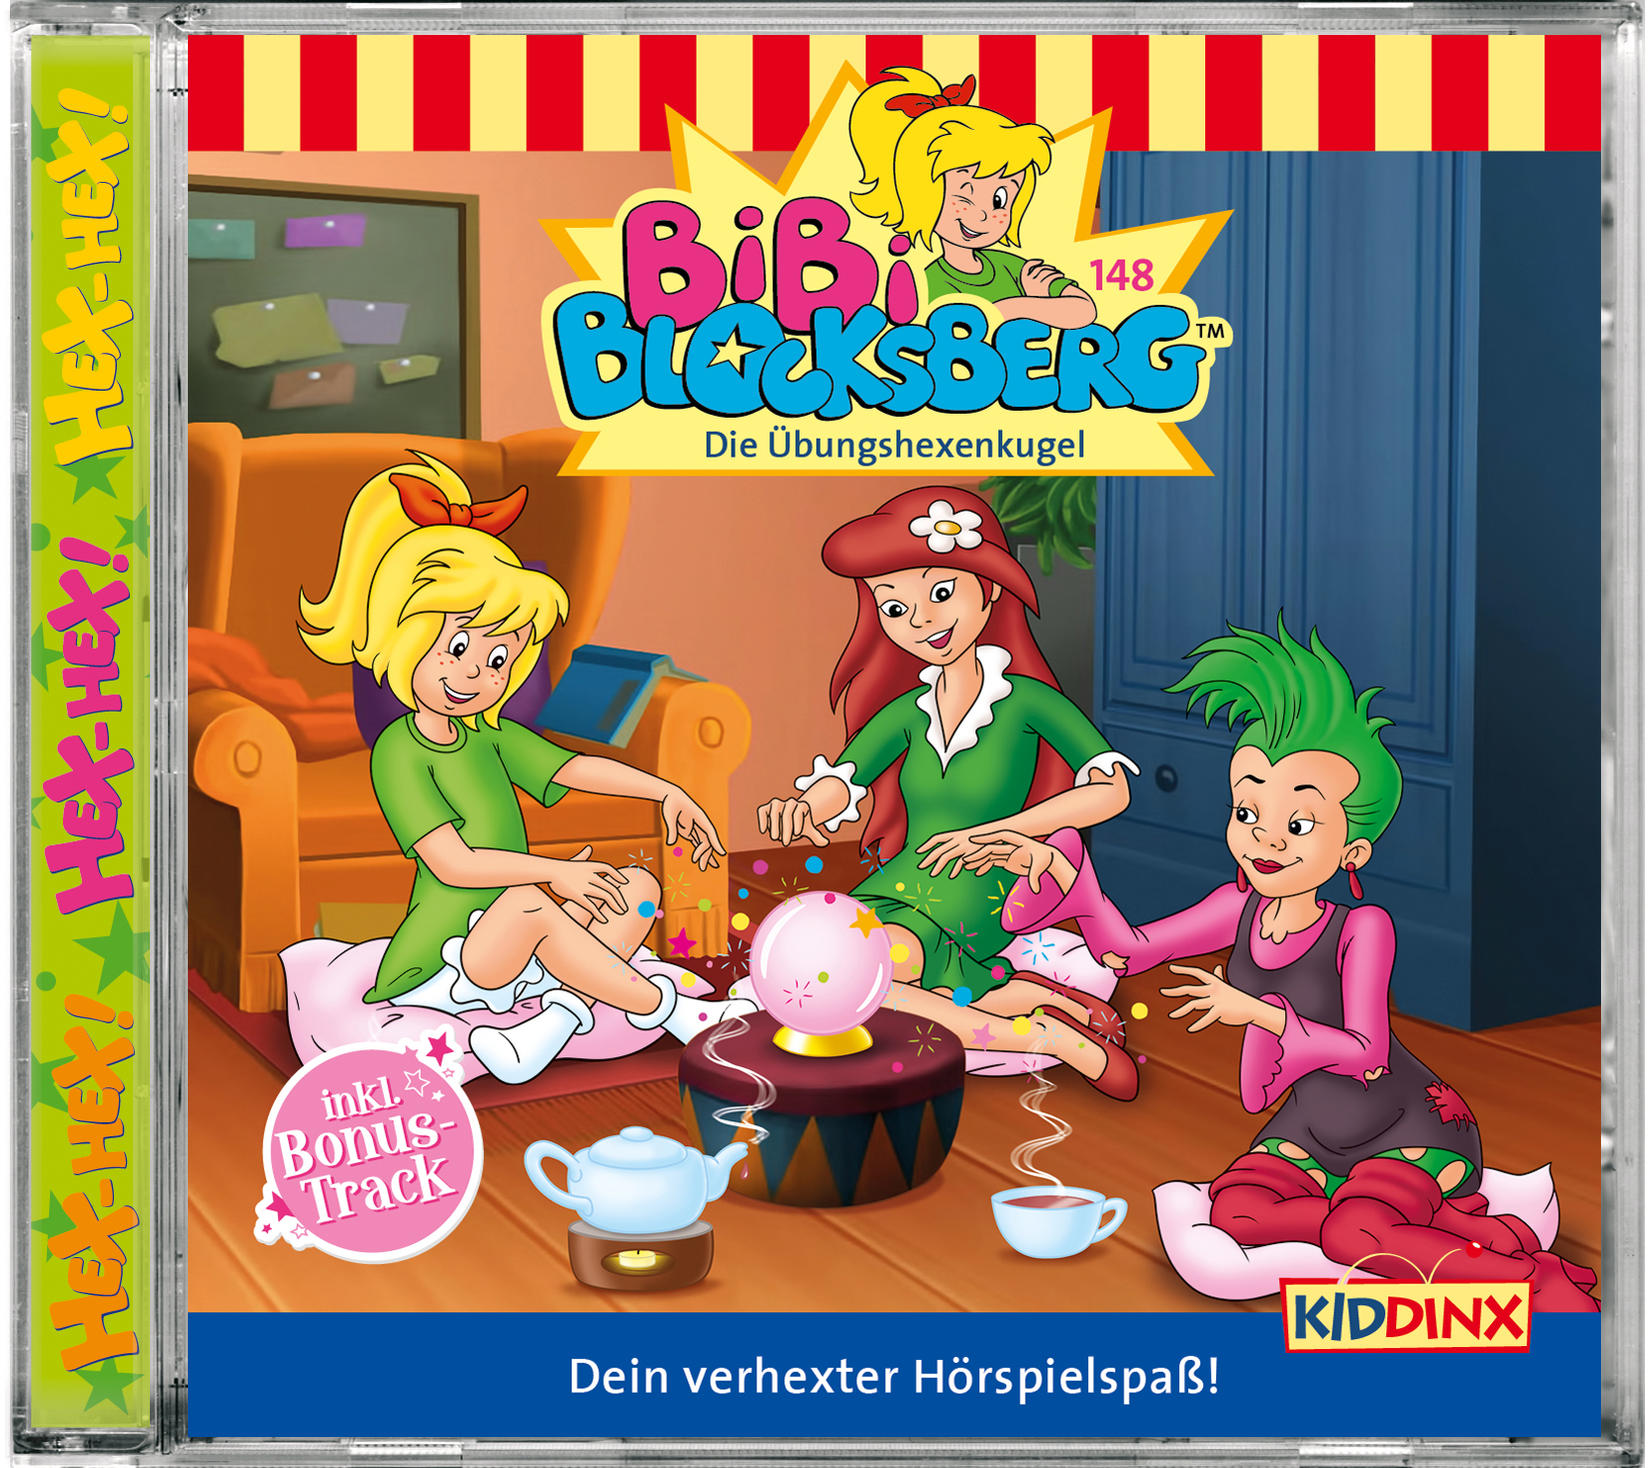 Bibi Blocksberg - Folge - Übungshexenkugel 148:Die (CD)